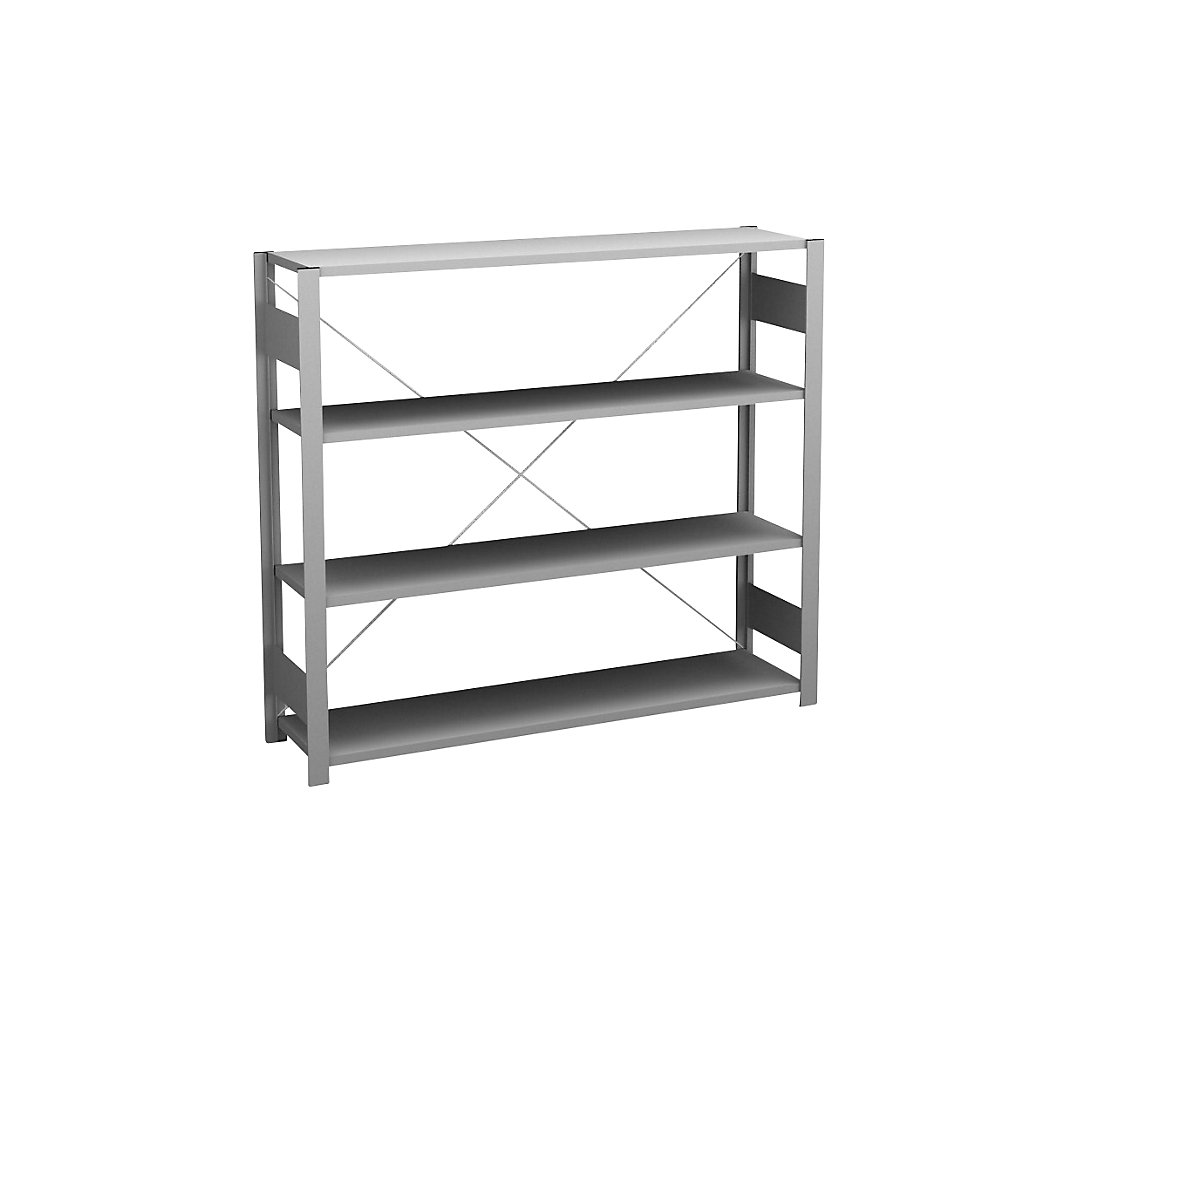 Zinc plated sideboard shelving unit – hofe, height 1200 mm, 4 shelves, standard shelf unit, shelf depth 300 mm, max. shelf load 175 kg-8